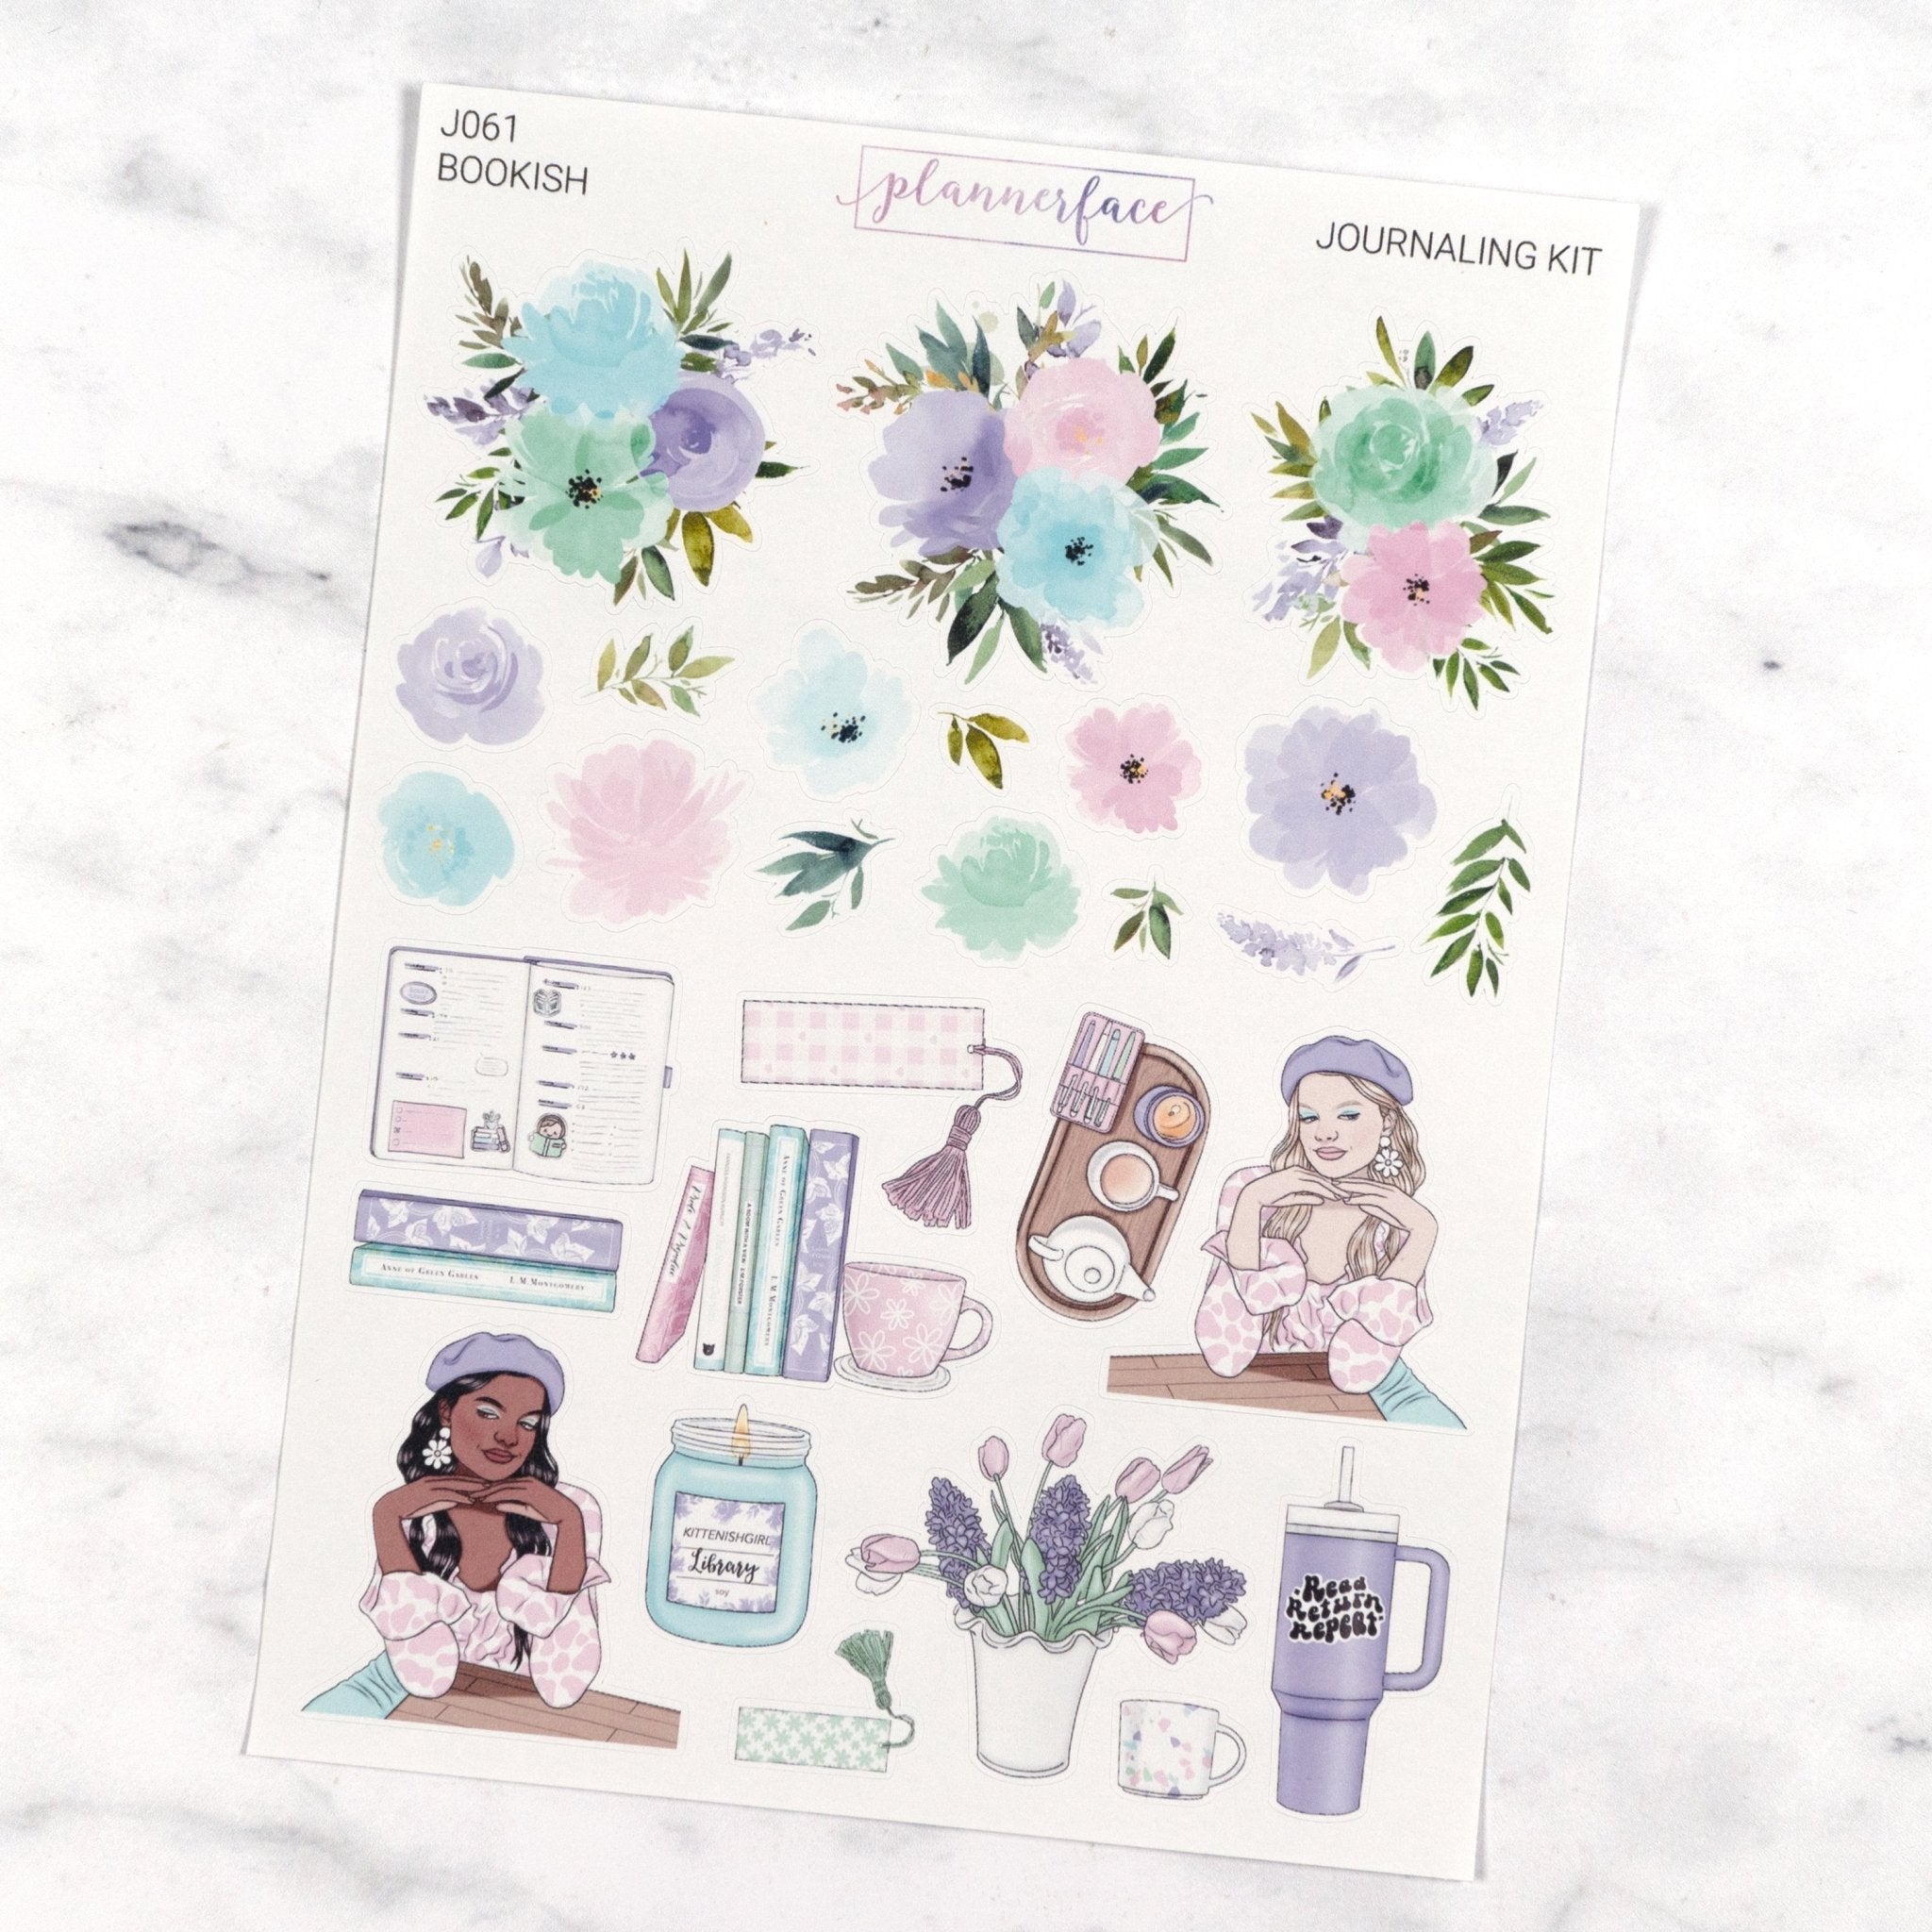 Bookish | Journaling Kit by Plannerface